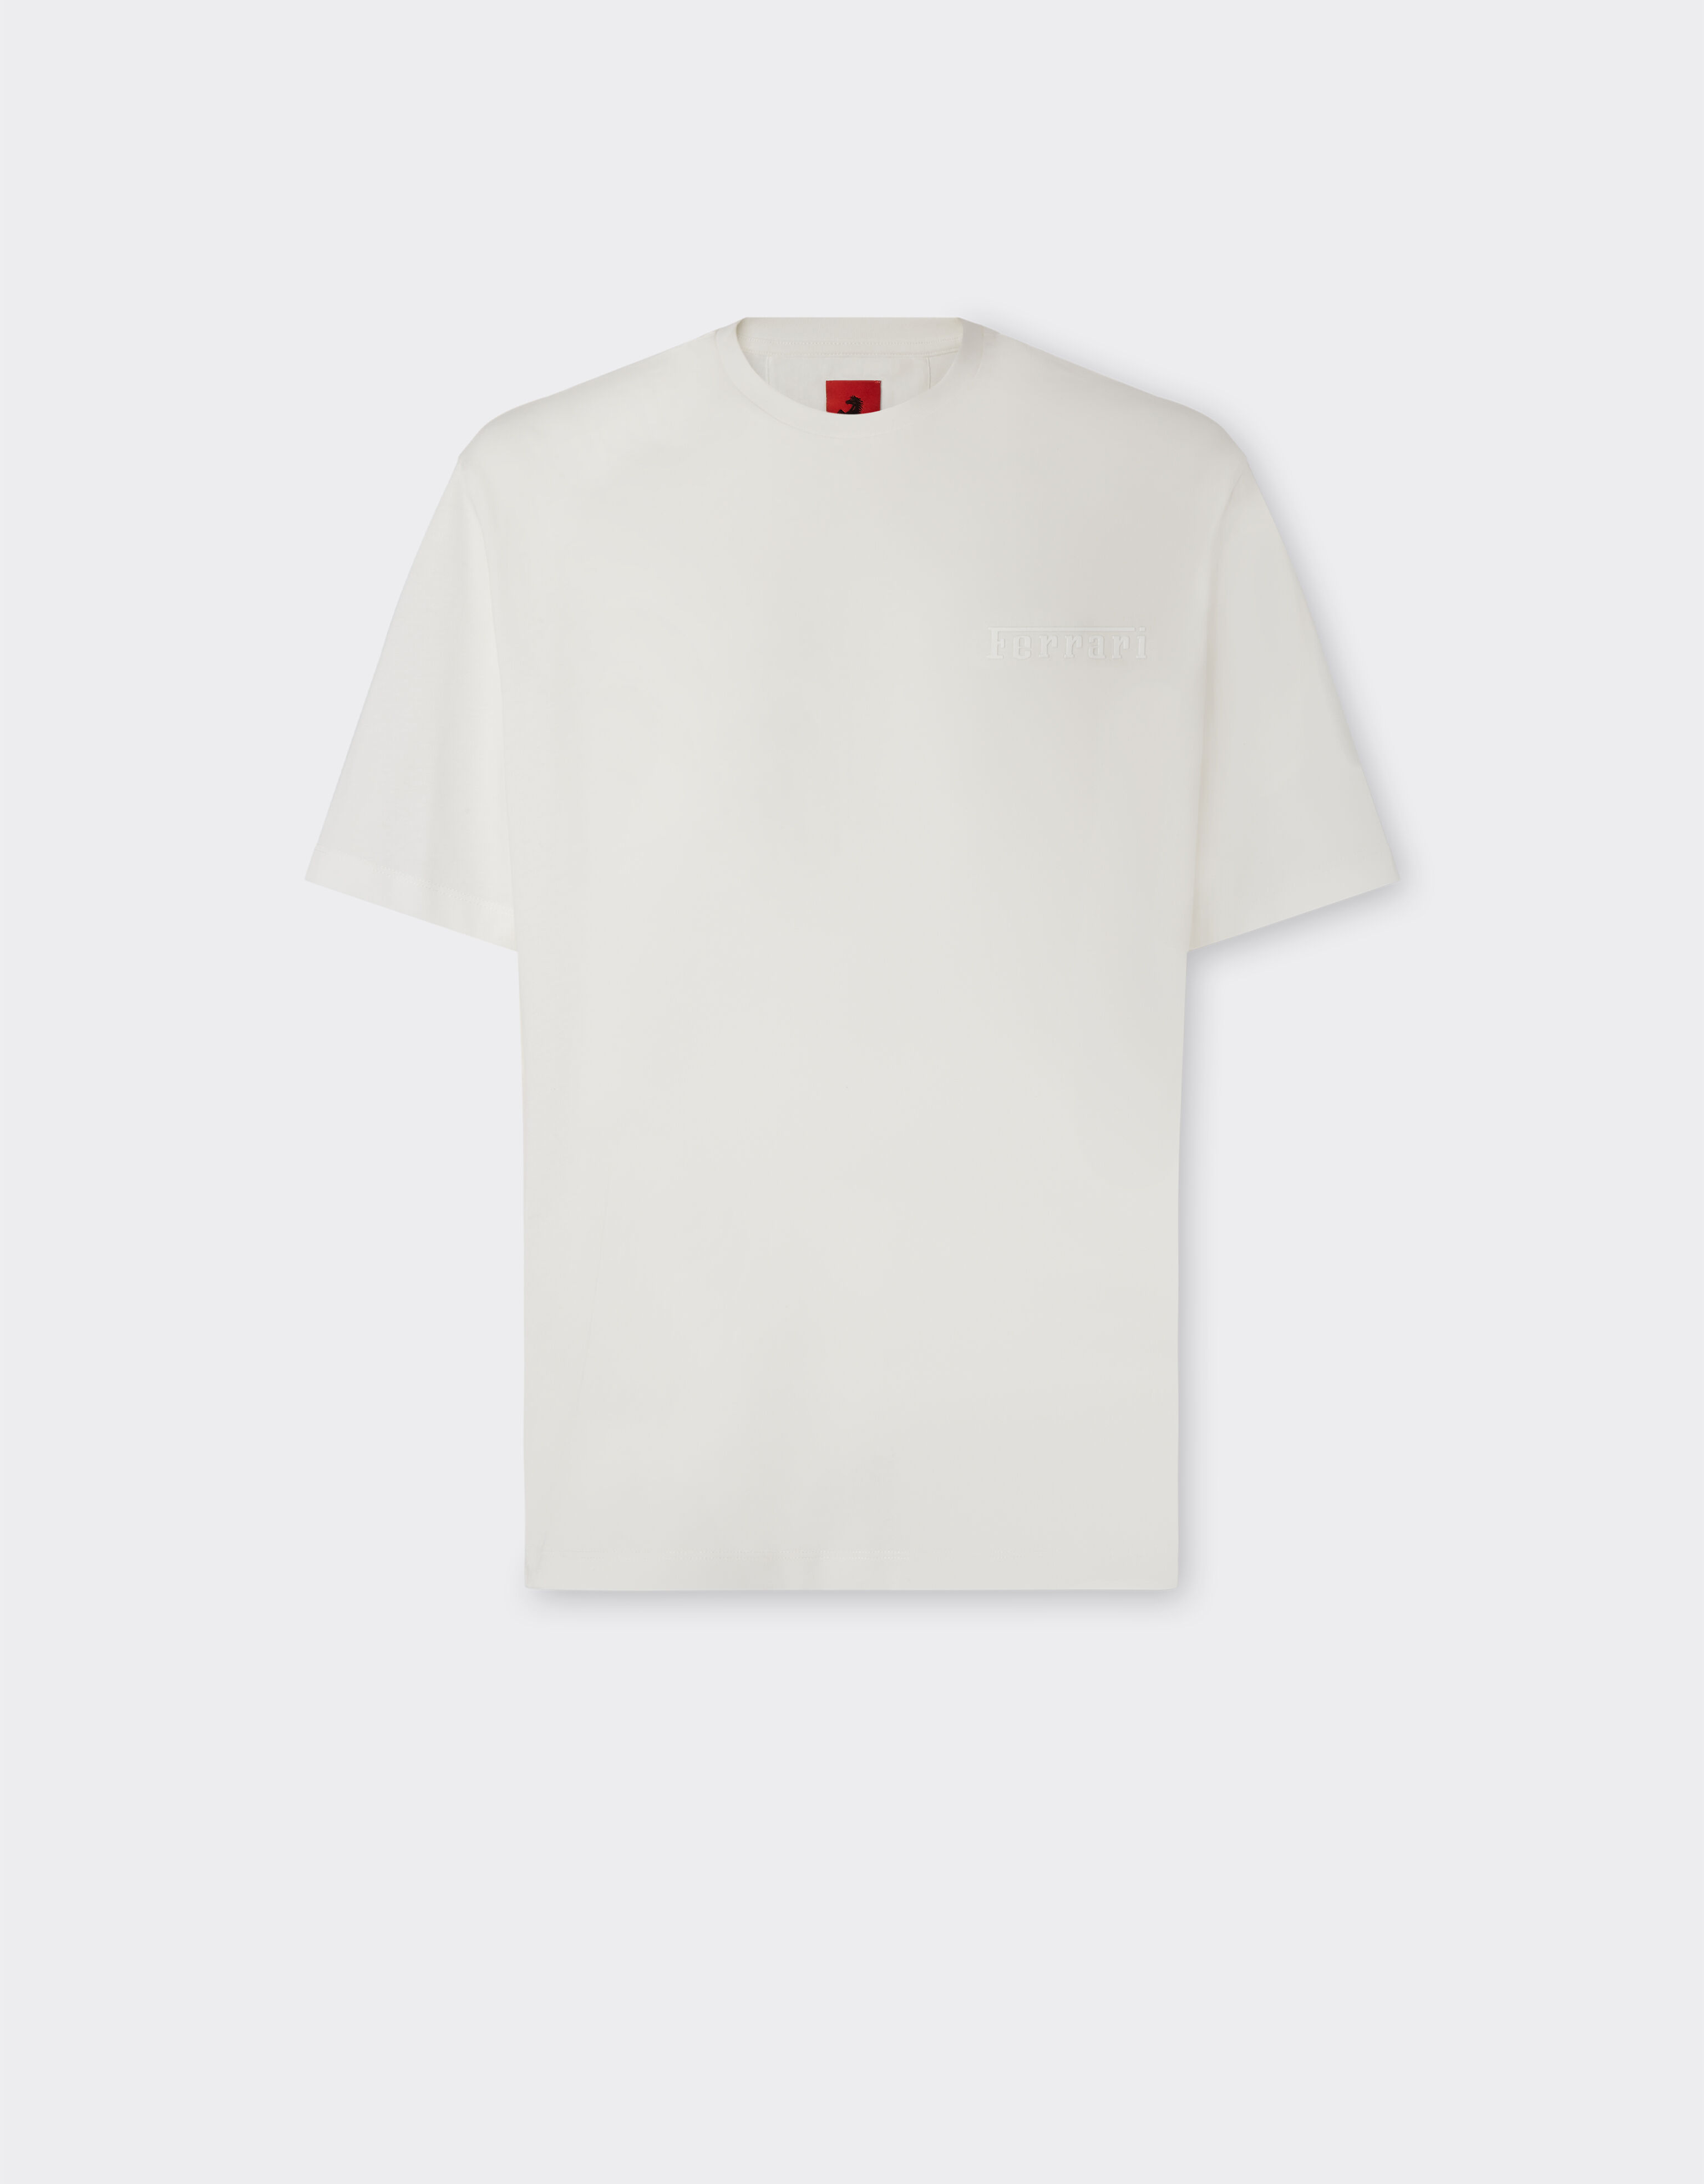 Ferrari Cotton T-shirt with Ferrari logo Optical White 21135f